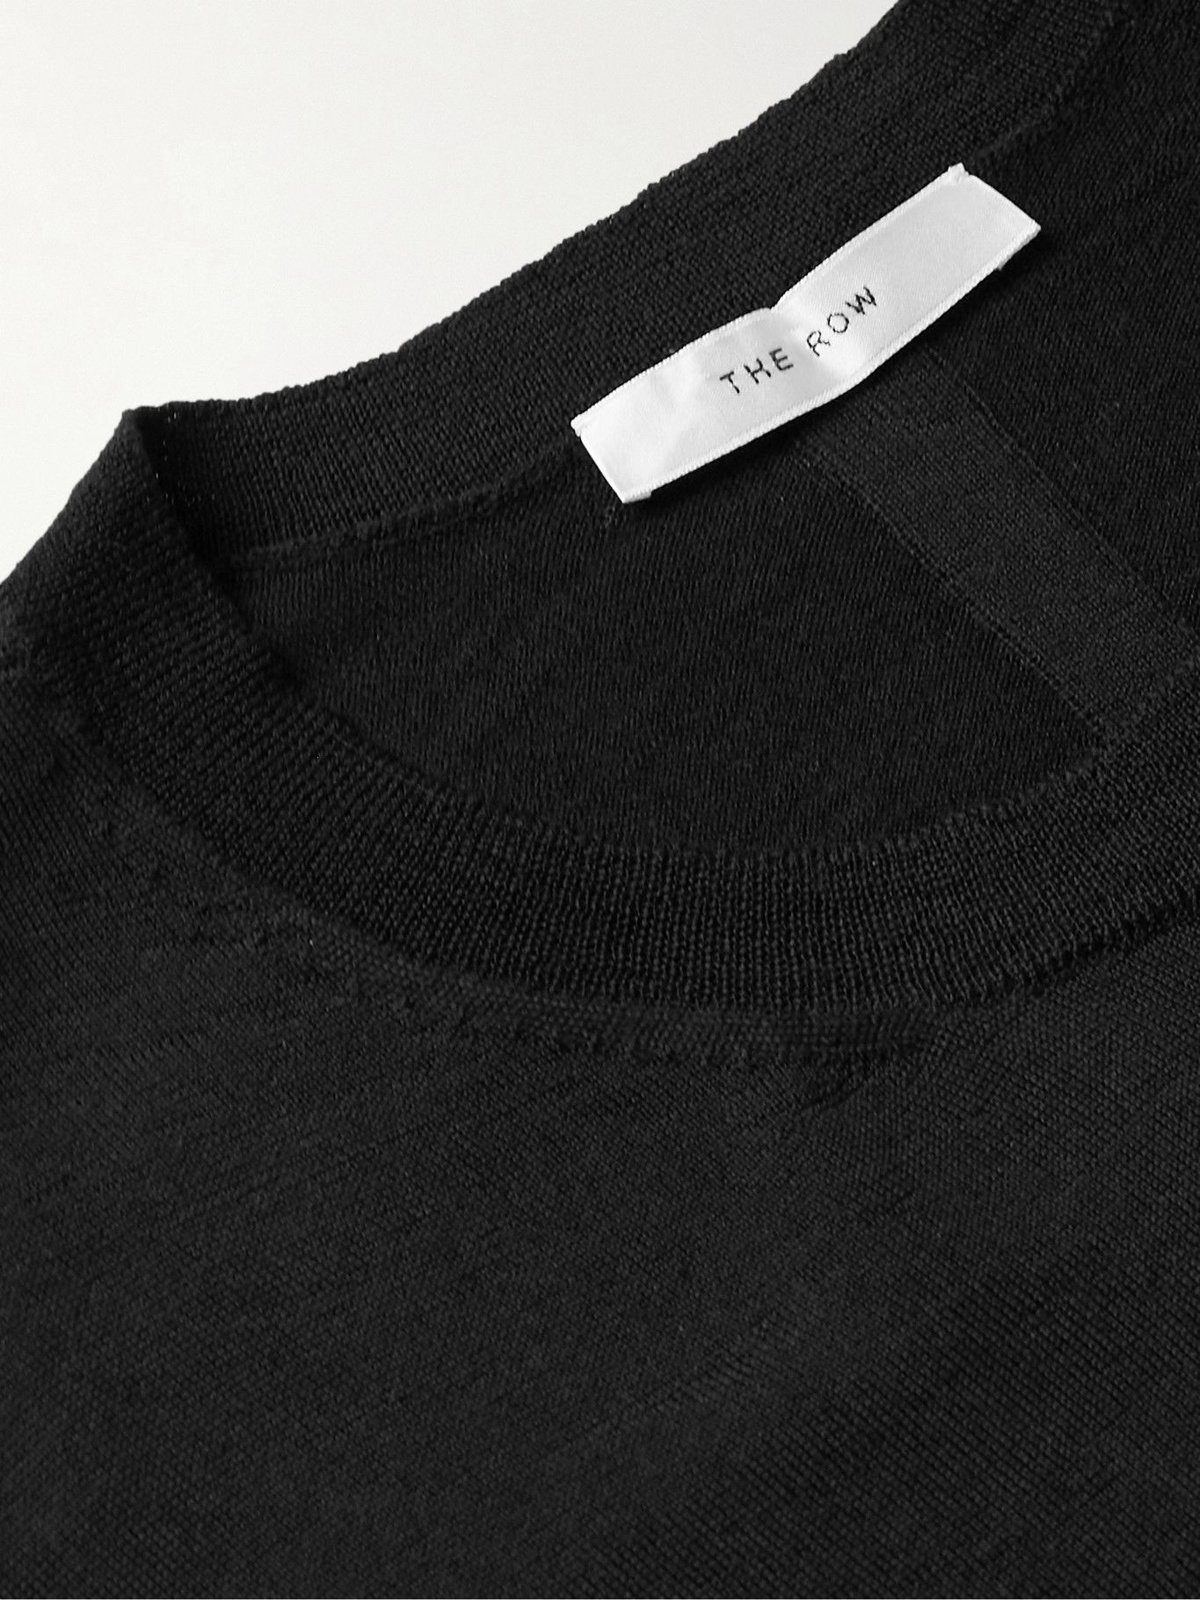 The Row - Dlomu Merino Wool T-Shirt - Black The Row